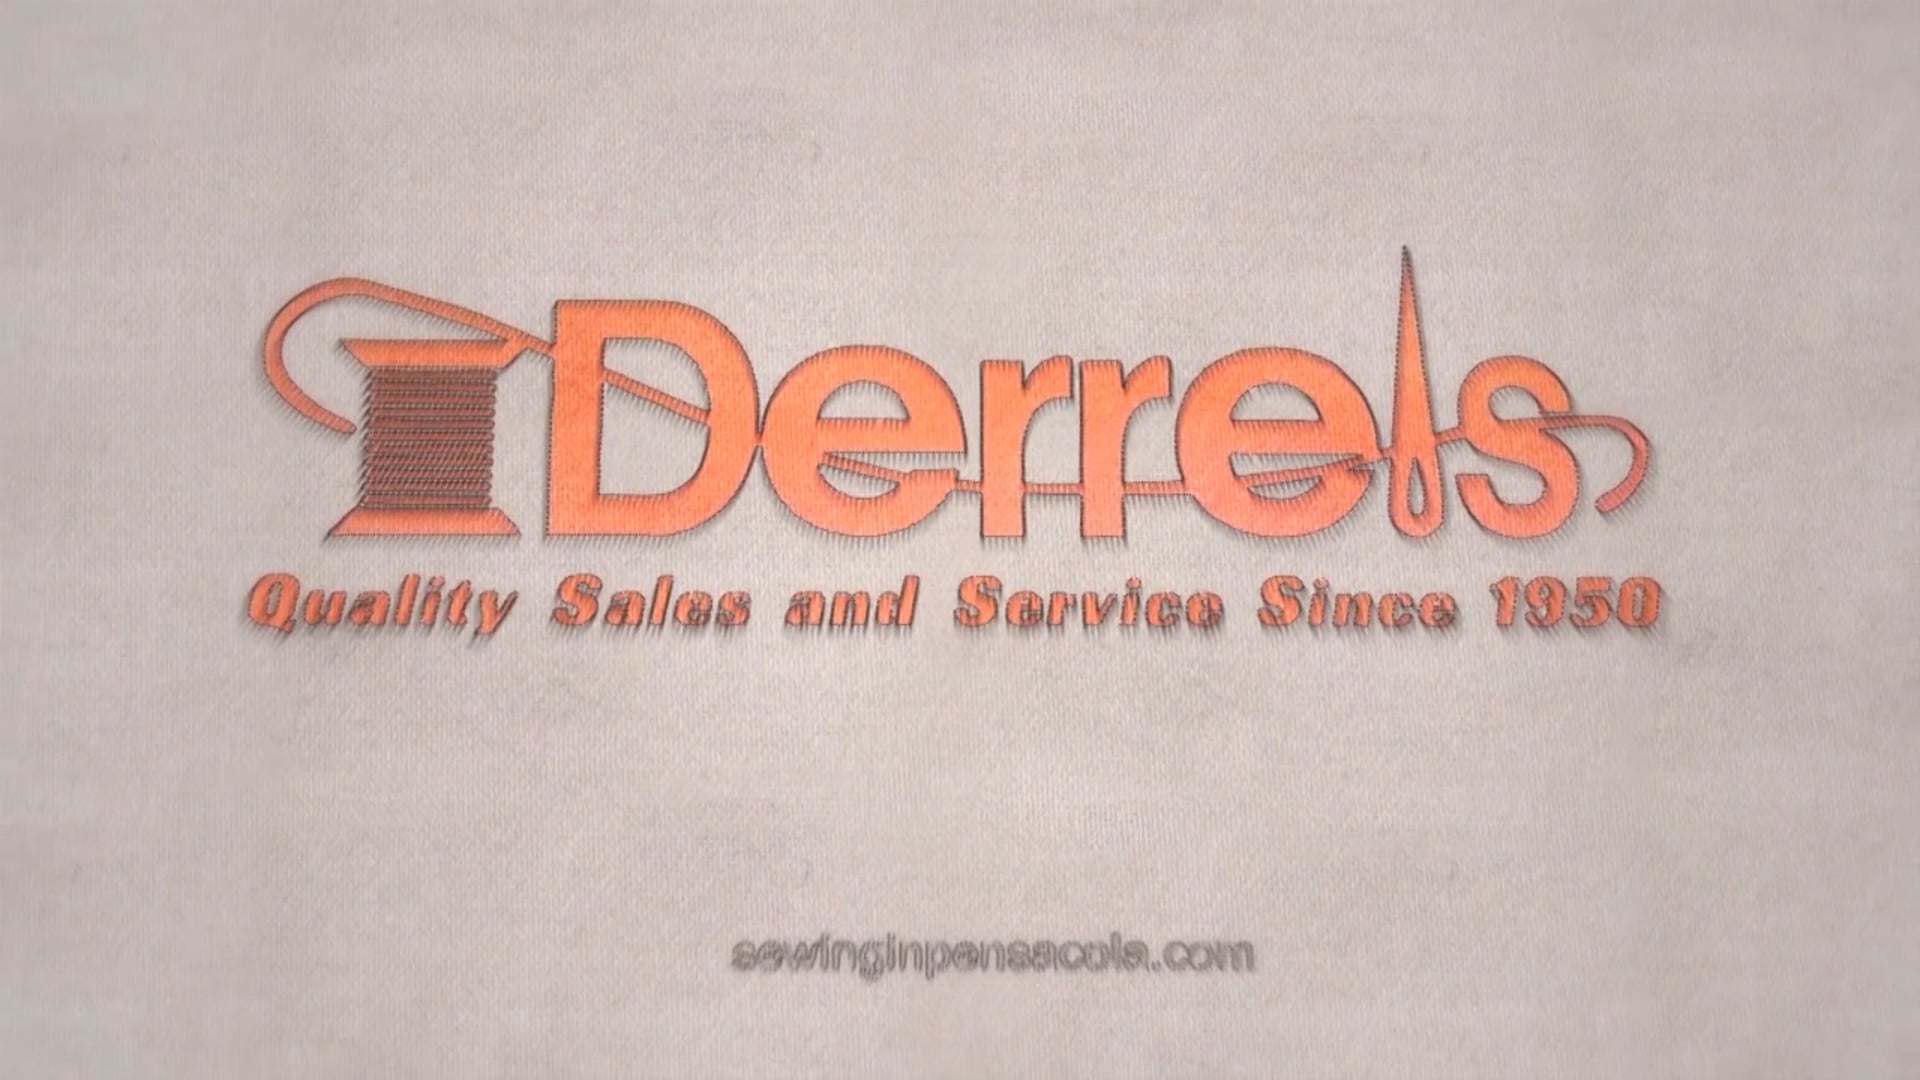 Derrel's Sewing - 2019